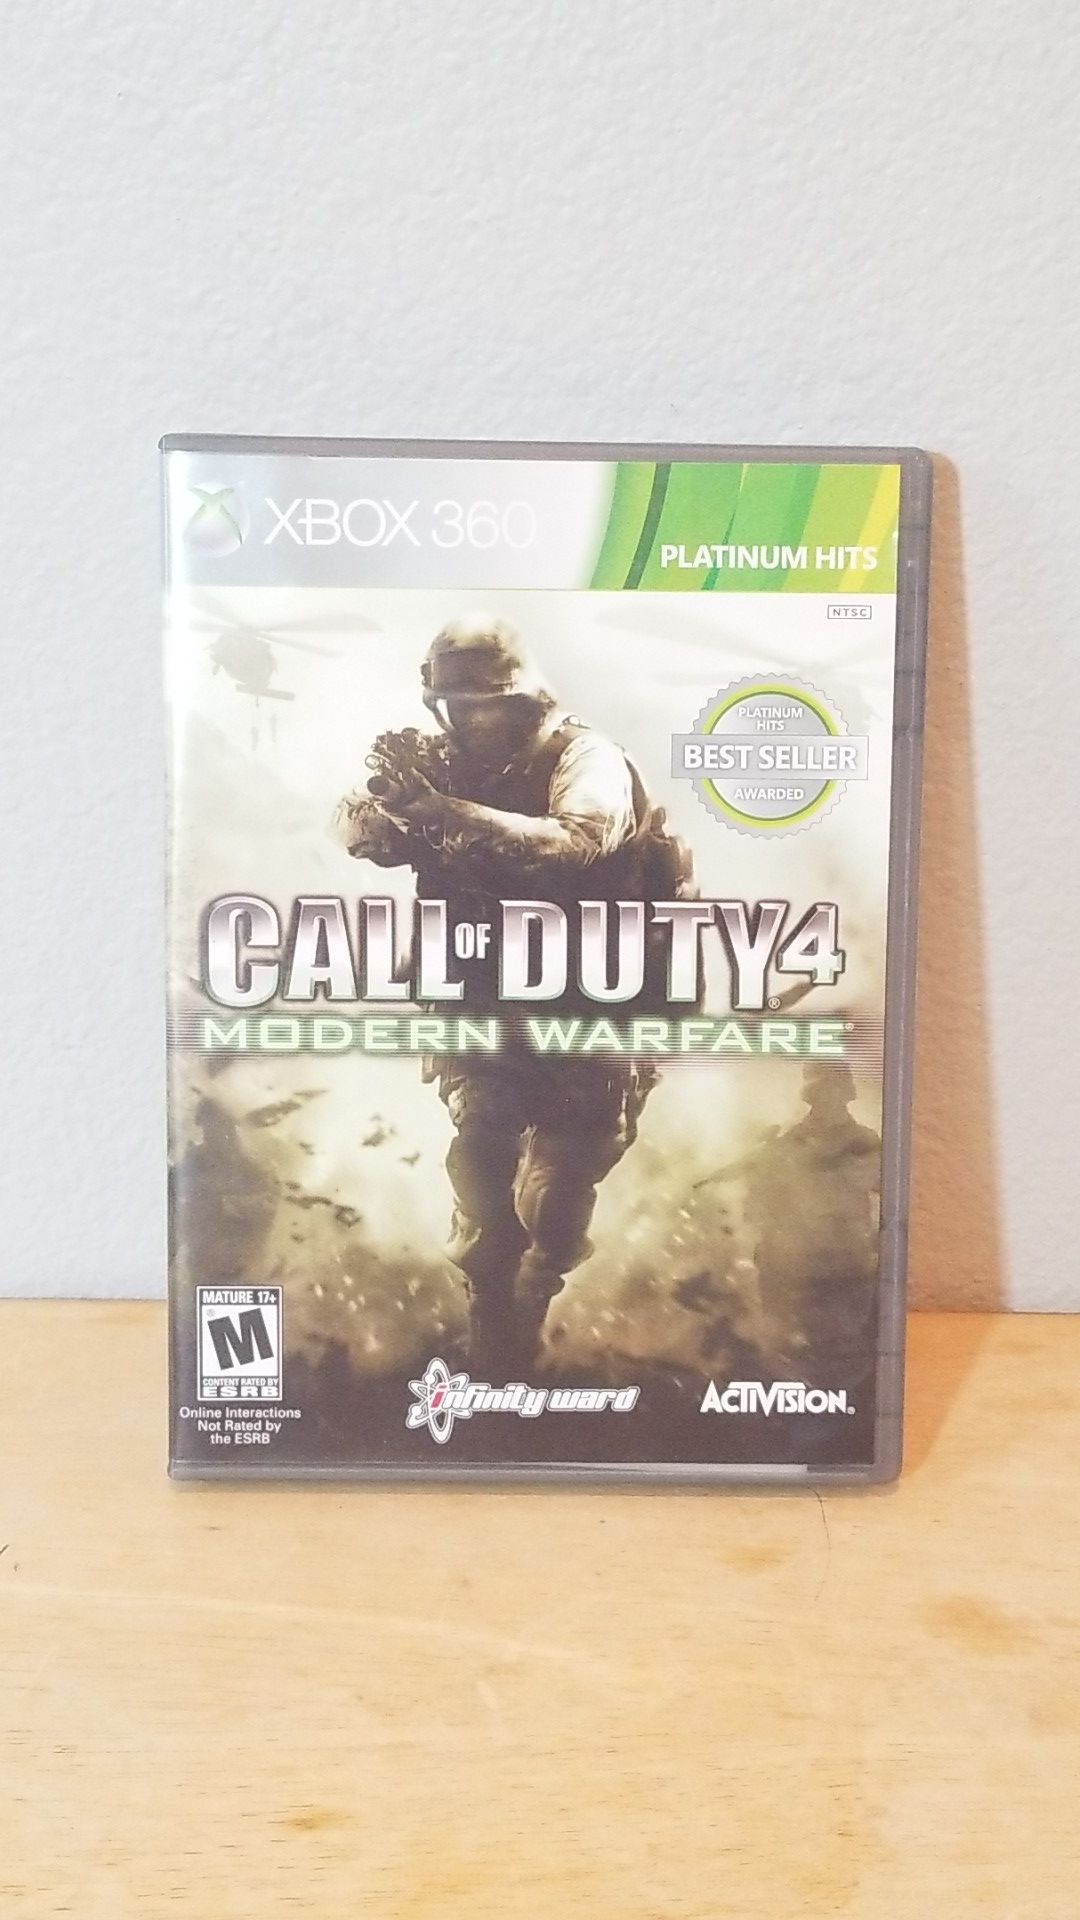 XBOX 360 Call of Duty 4 Modern Warfare Complete